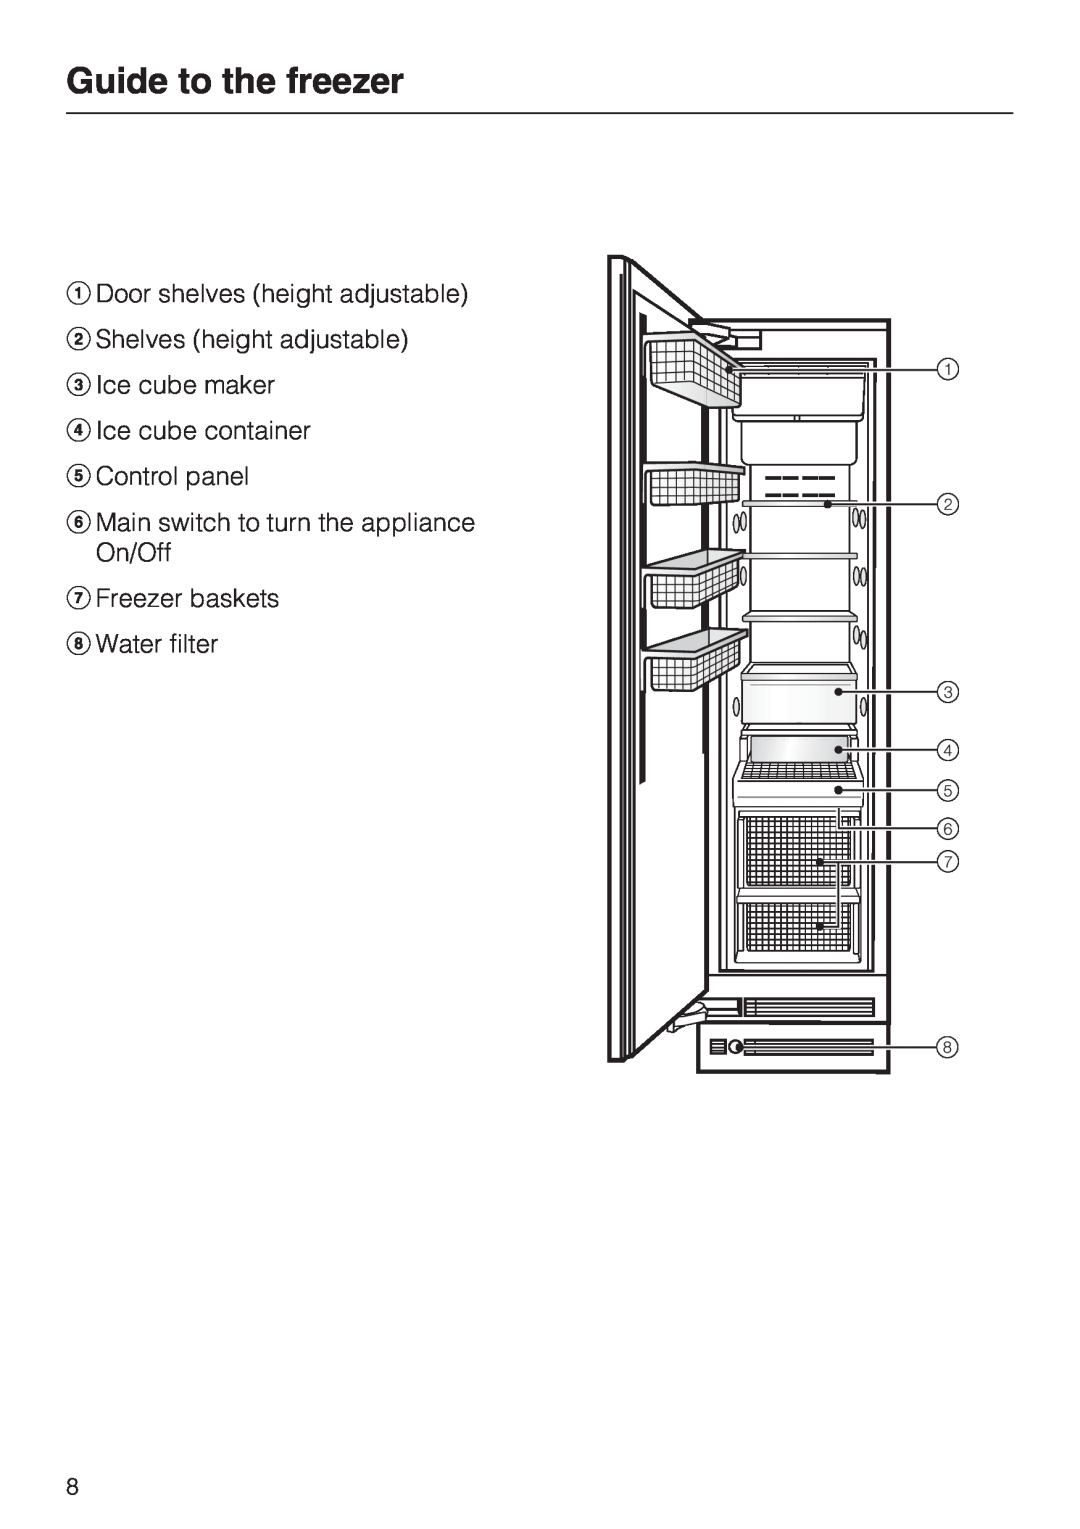 Miele F 1411 Vi Guide to the freezer, Door shelves height adjustable, Shelves height adjustable Ice cube maker 